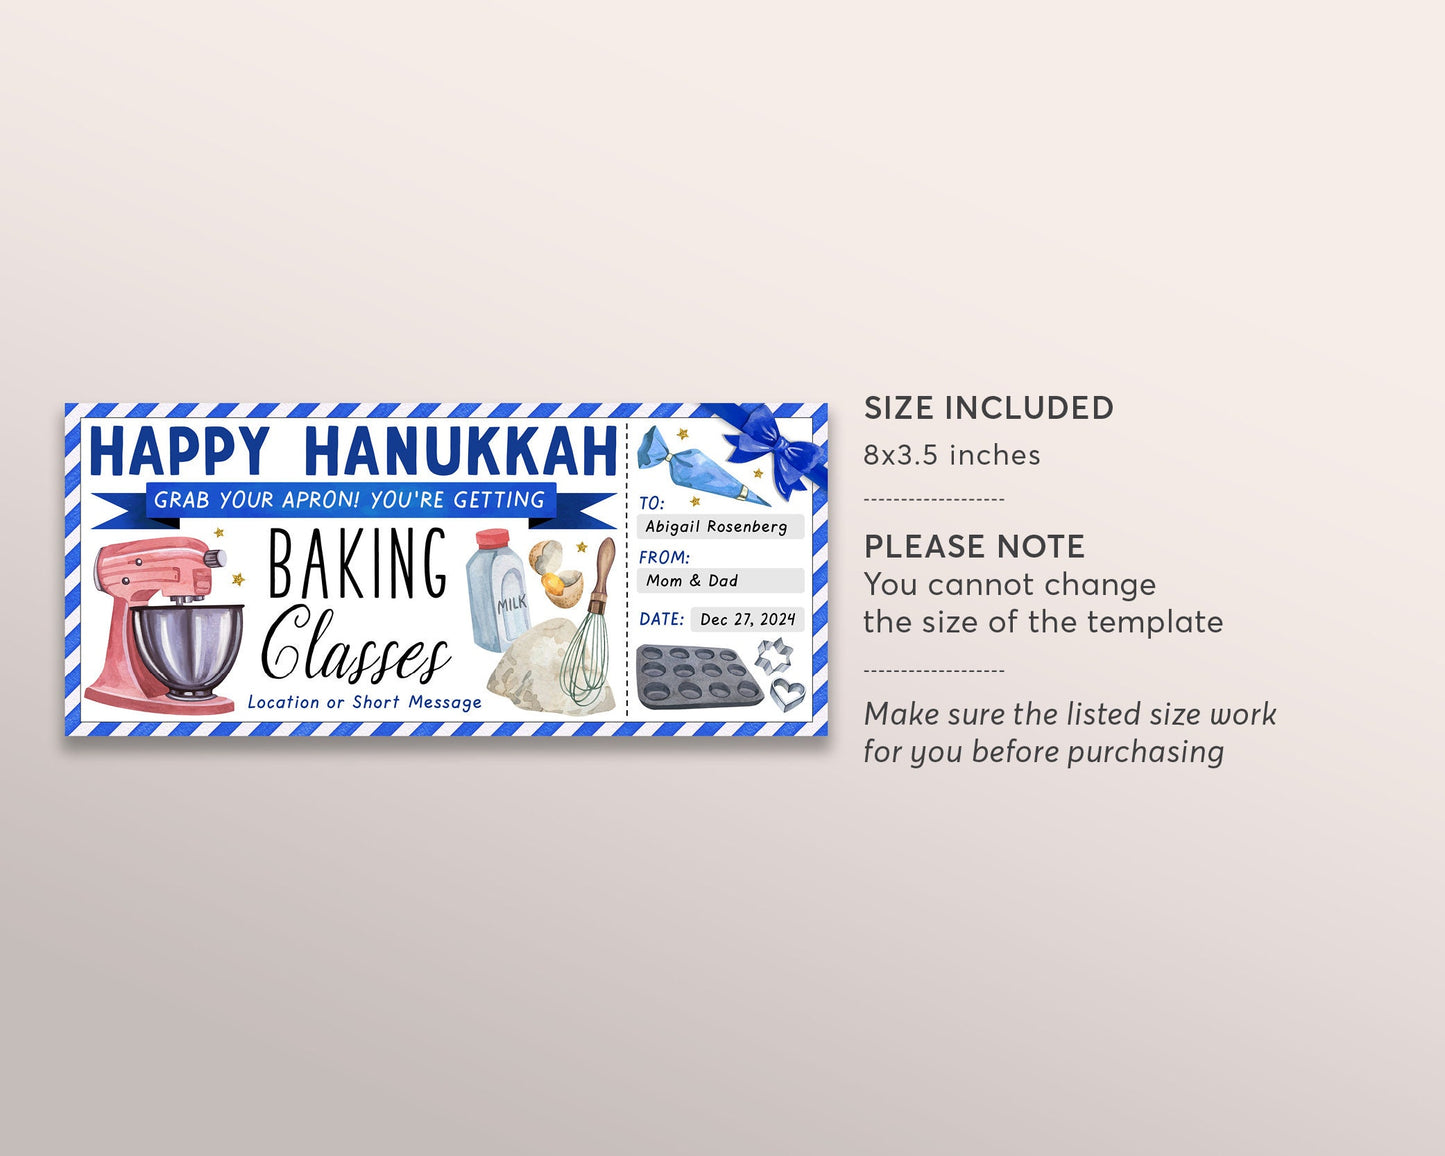 Hanukkah Baking Classes Gift Certificate Ticket Editable Template, Surprise Chanukah Cake Baking Lessons, Cake Decoration Gift Voucher